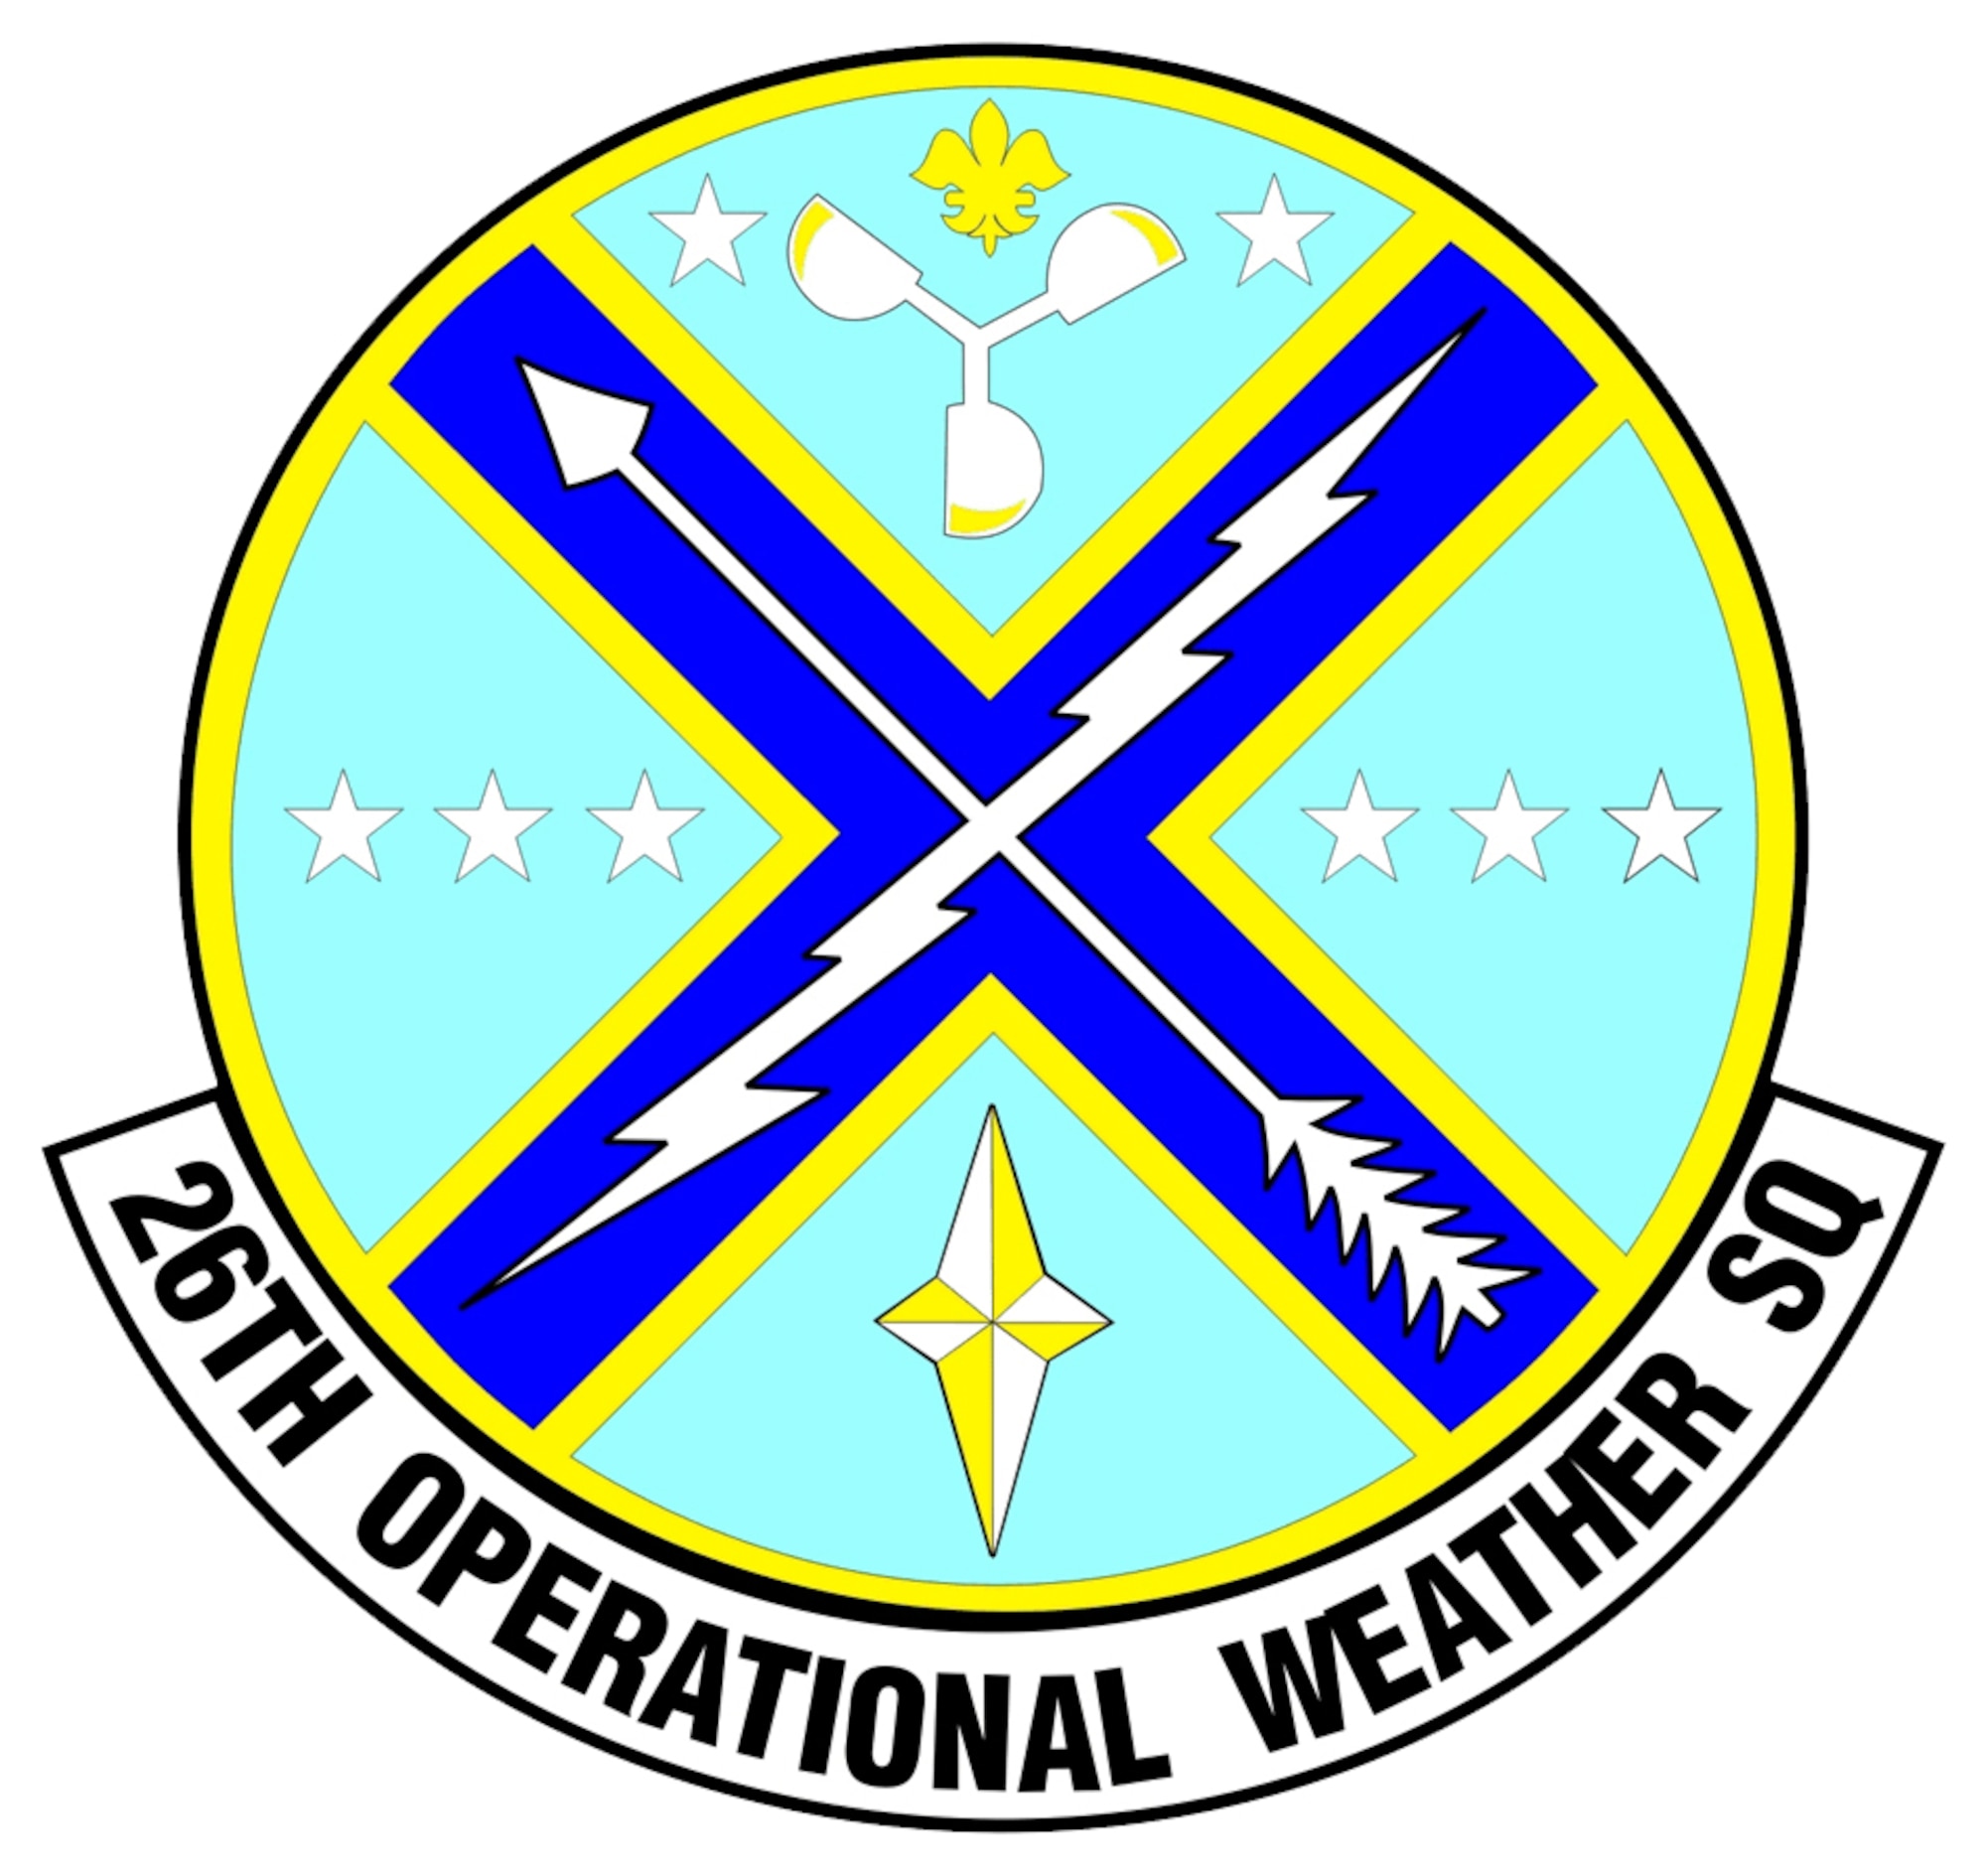 26th Operational Weather Squadron emblem.